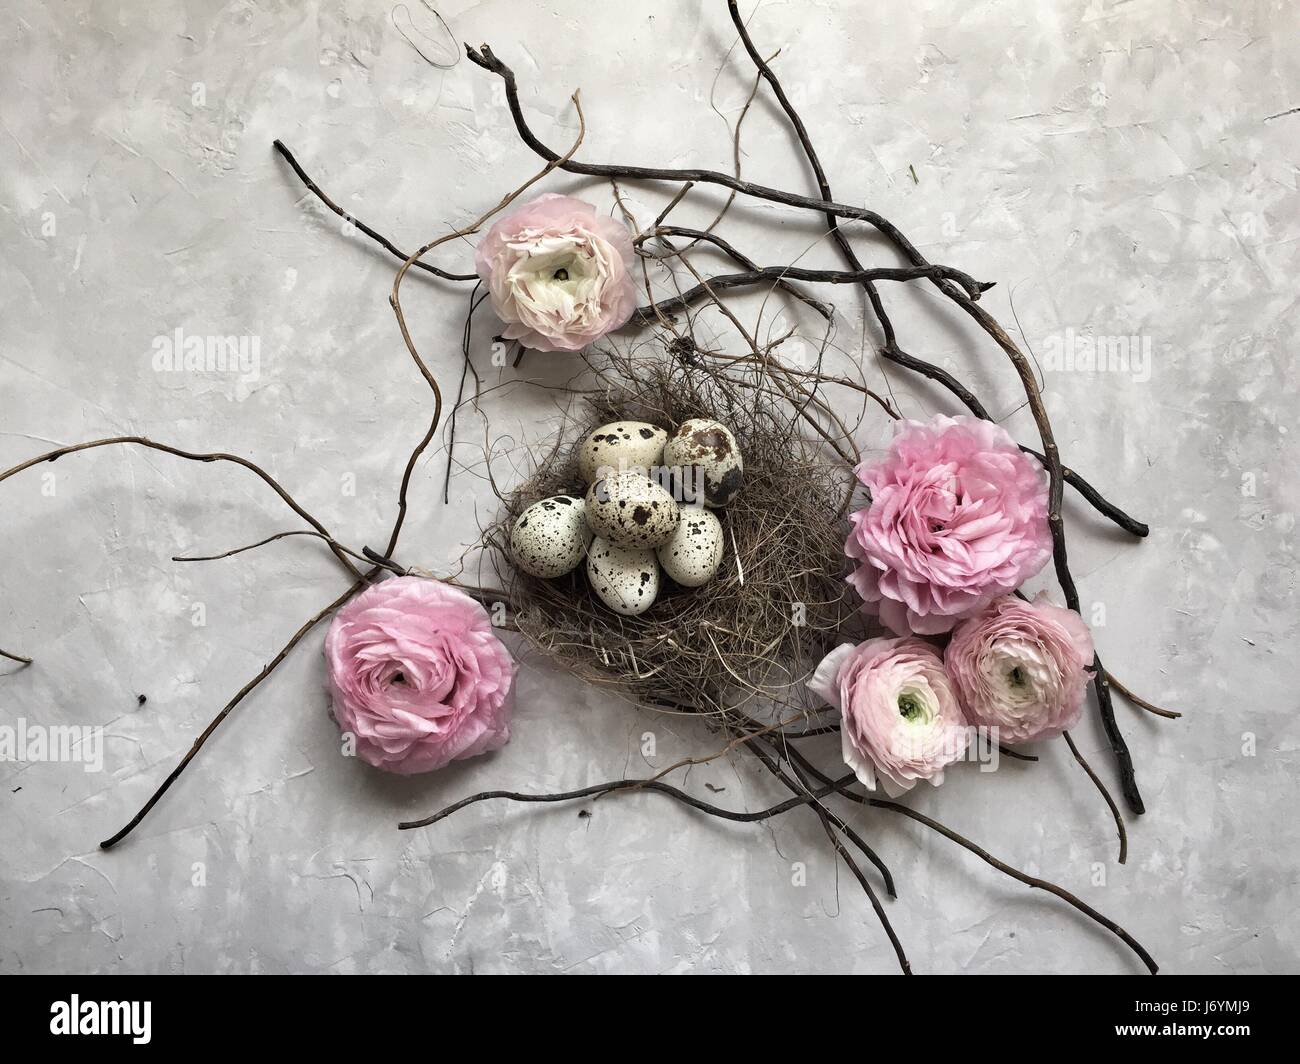 Quail eggs in a bird's nest with ranunculi  flowers Stock Photo